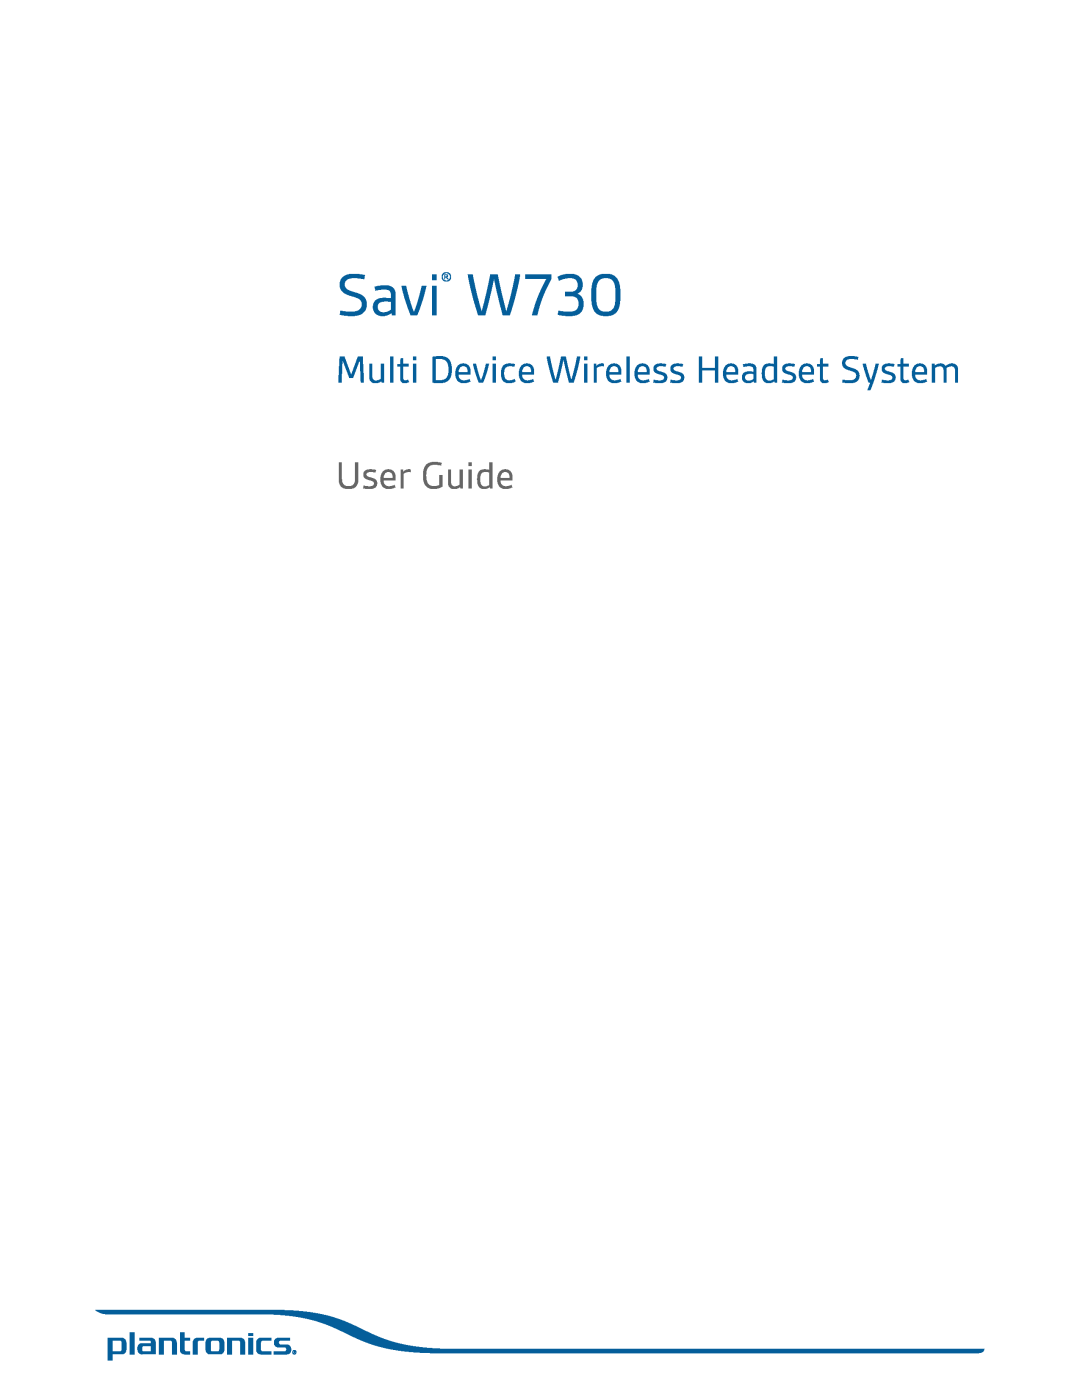 Plantronics manual Savi W730, Multi Device Wireless Headset System, User Guide 